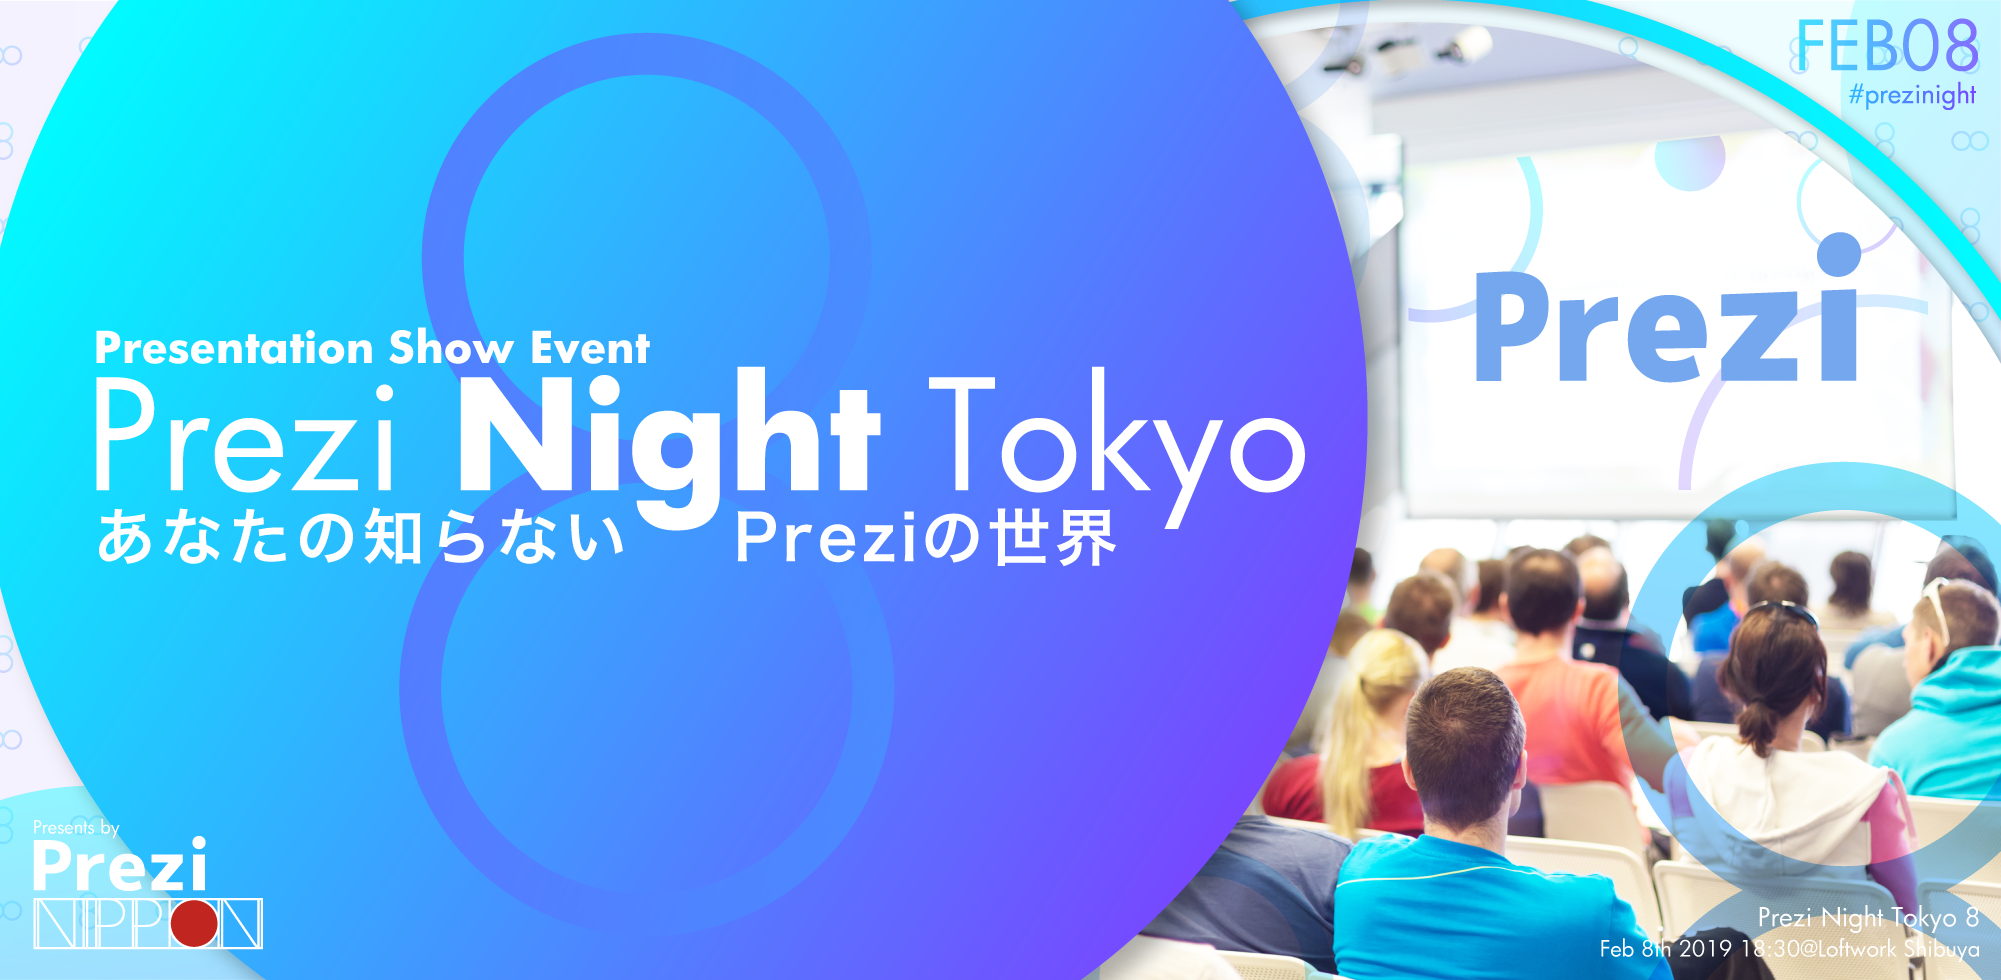 Prezi Night Tokyo 8開催のお知らせ【2/8 Fri 渋谷】